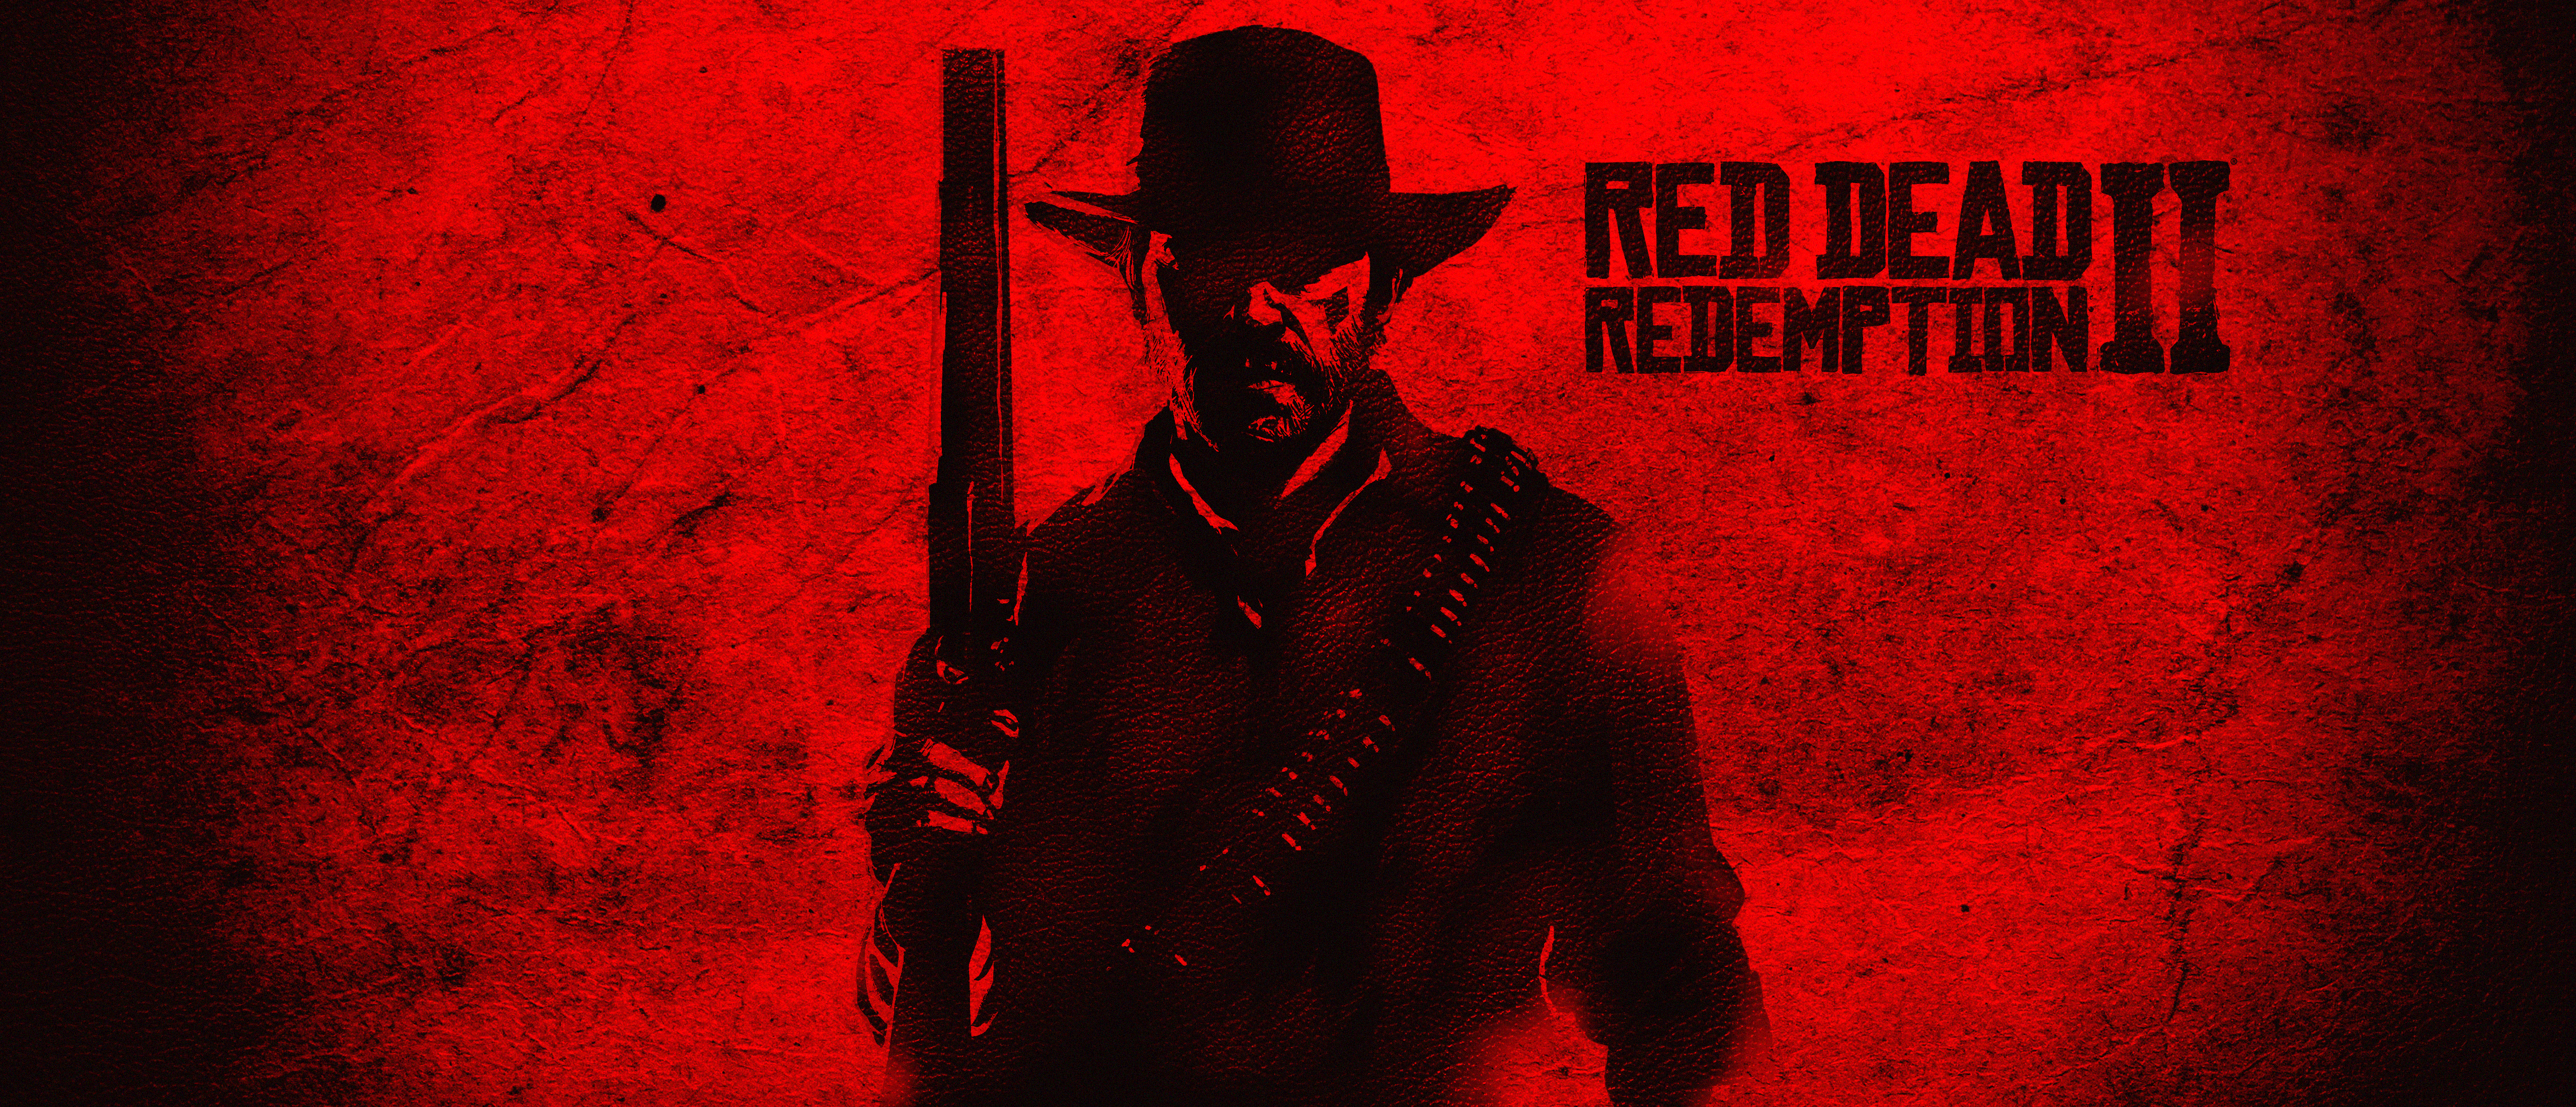 Red Dead Redemption Red Dead Redemption 2 Arthur Morgan Rockstar Games Video Games 5120x2200